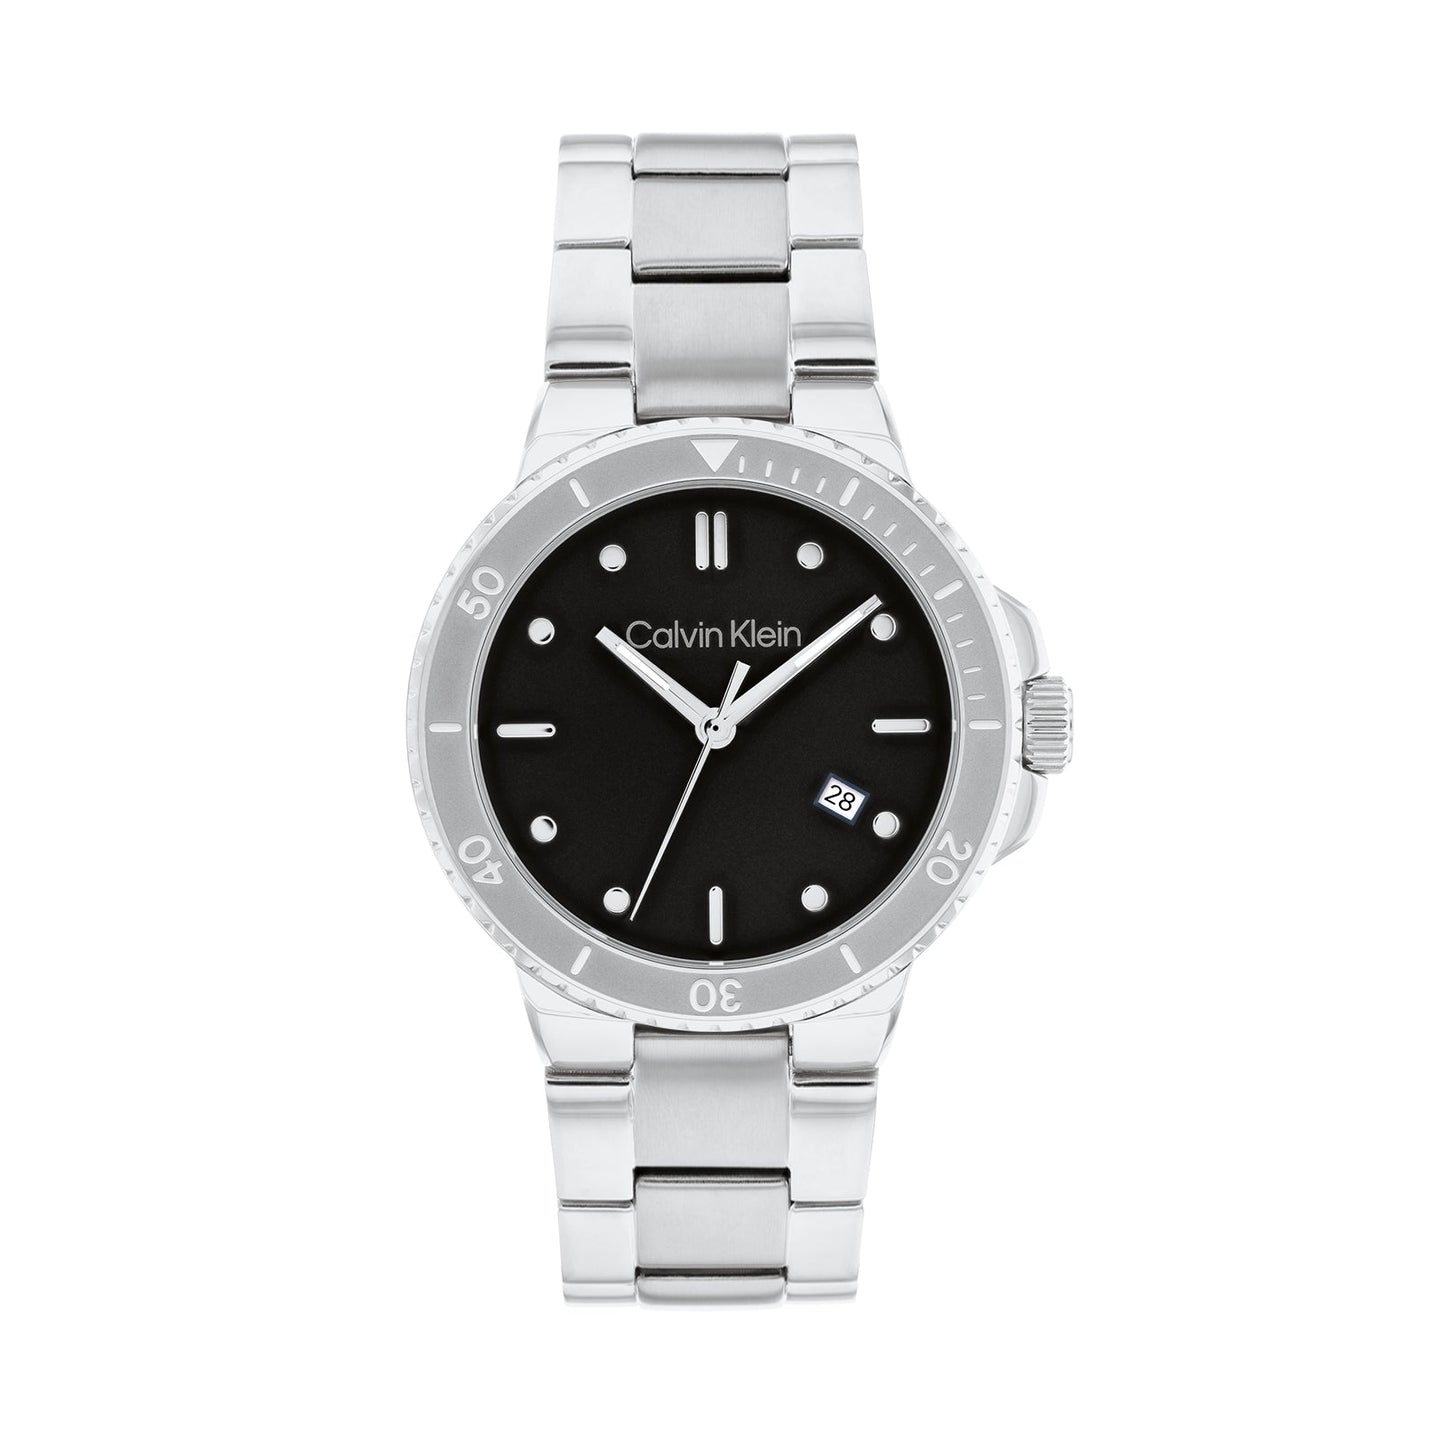 Calvin Klein 25200203 Men's Steel Watch